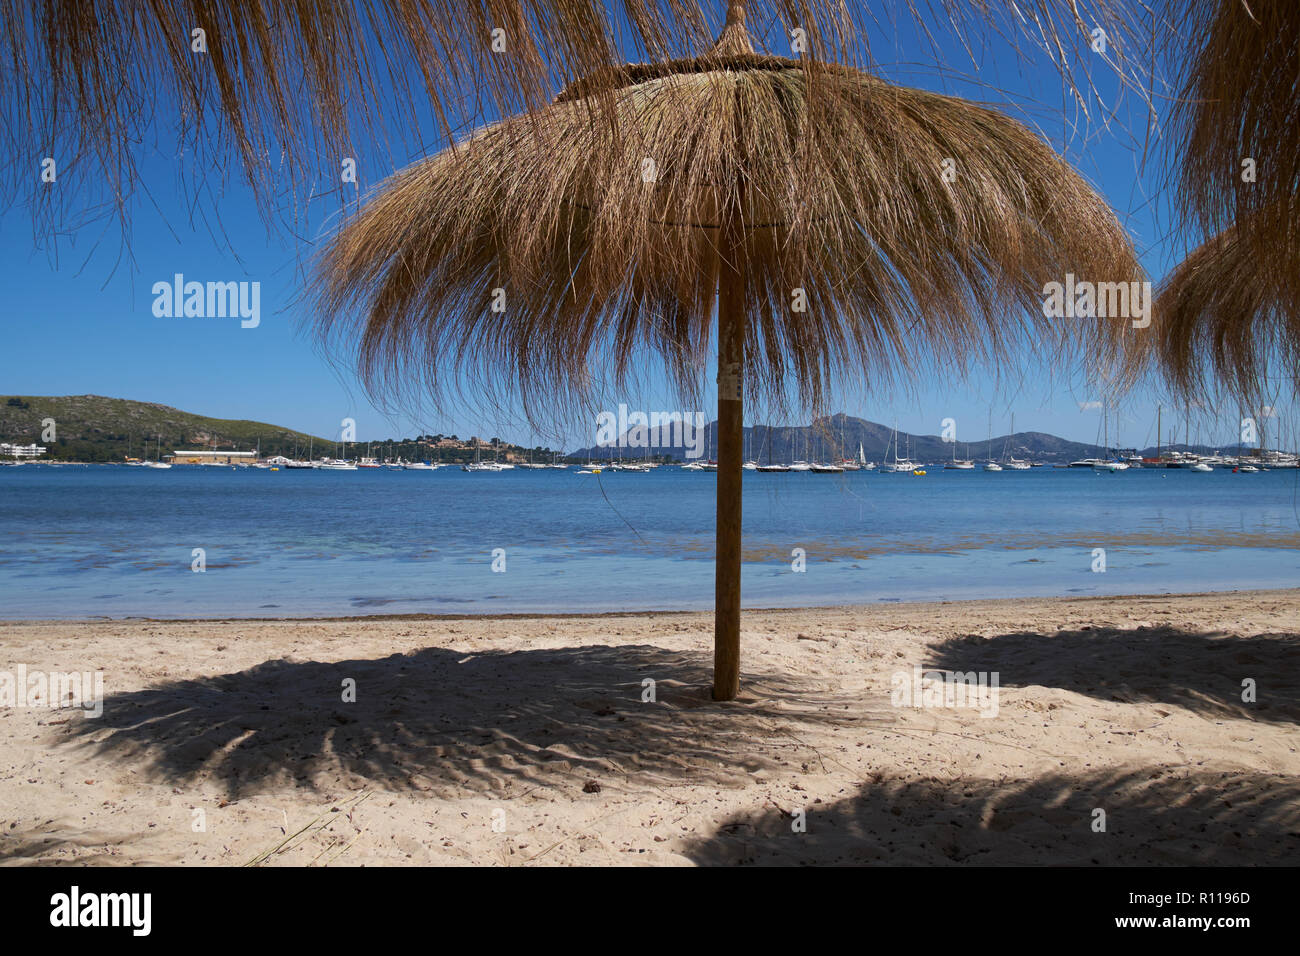 Palapa sun shade on the beach at Port de Pollenca (or Puerto de Pollensa), Majorca, Balearic Islands, Spain. Stock Photo